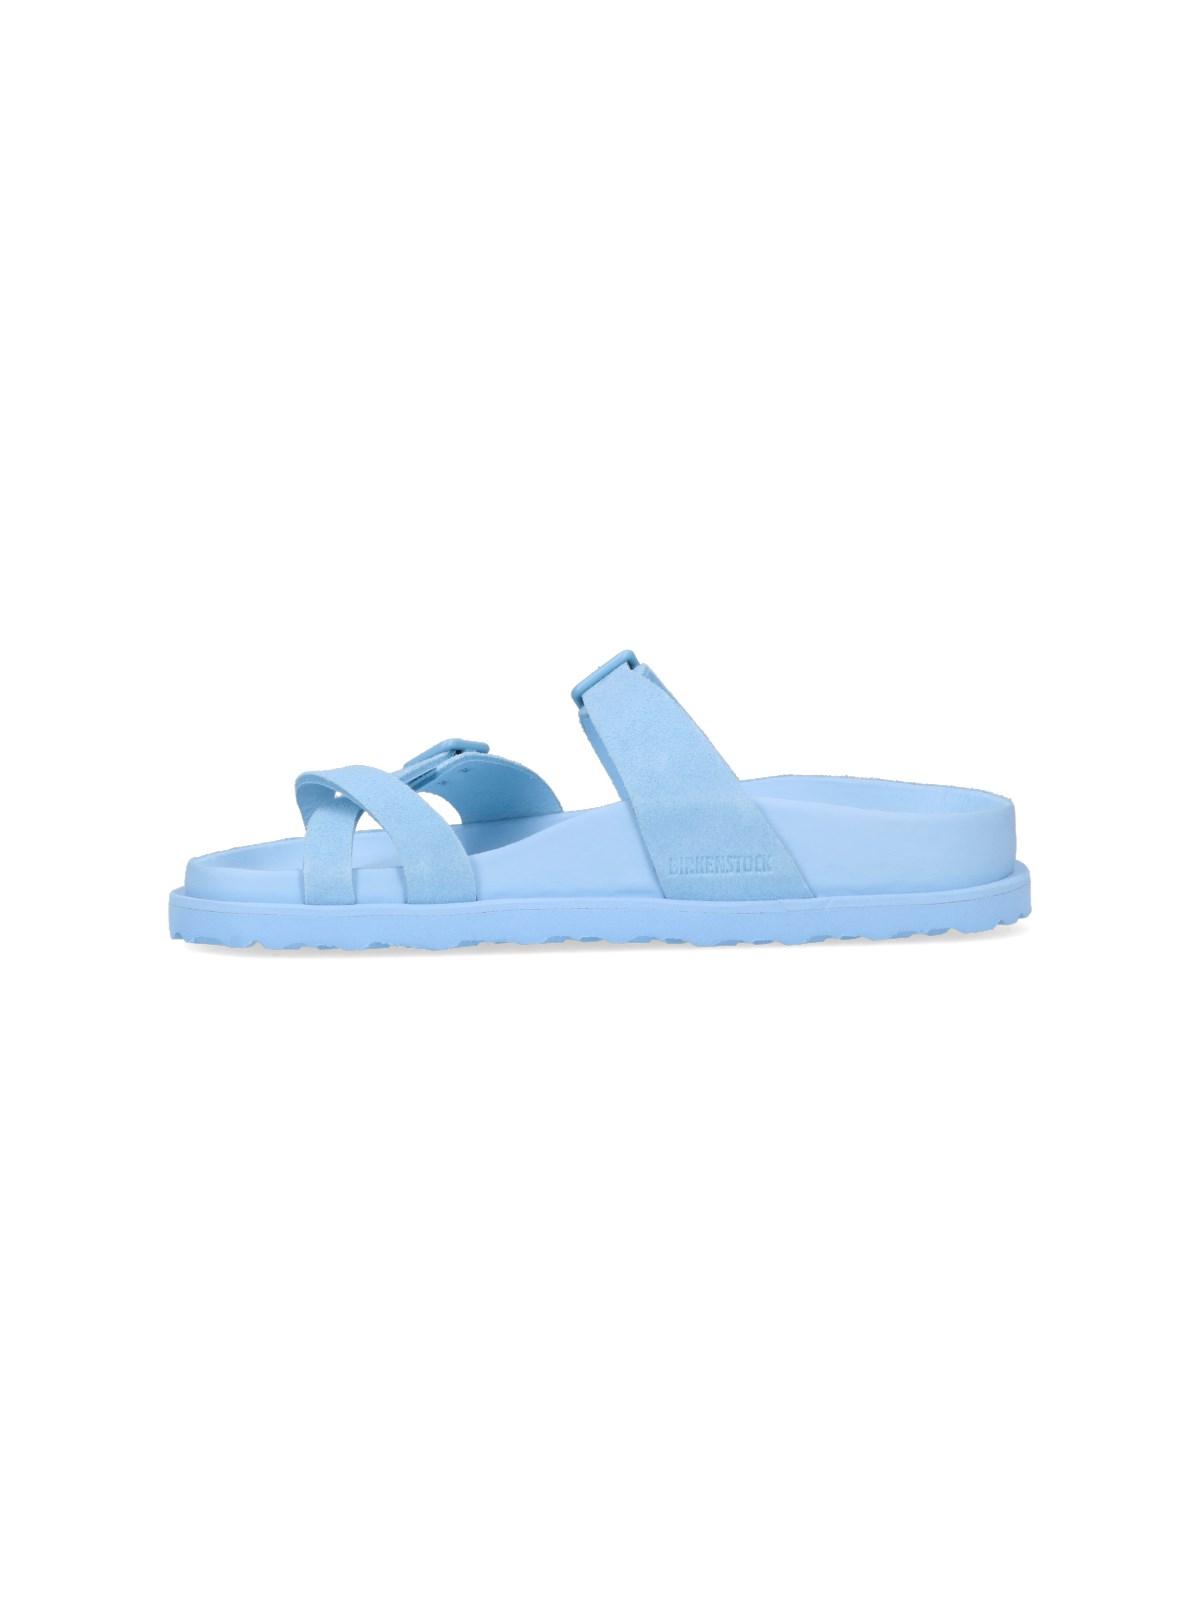 Birkenstock Sandals in Blue Lyst